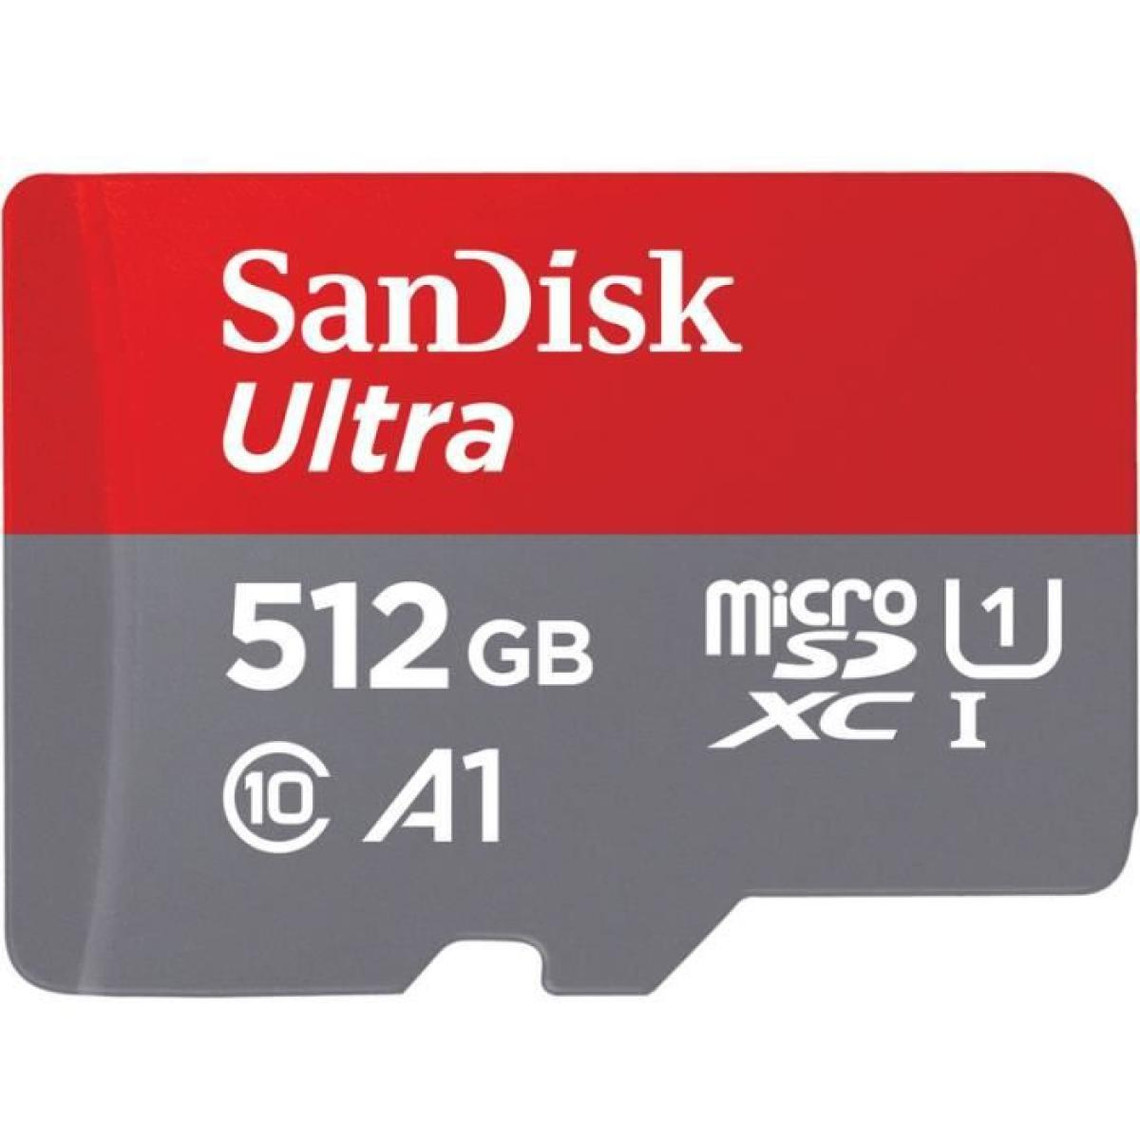 Sandisk Sandisk ultra 512 Go Micro SD carte mémoire micro SDXC Class 10 UHS-I 120Mb/s